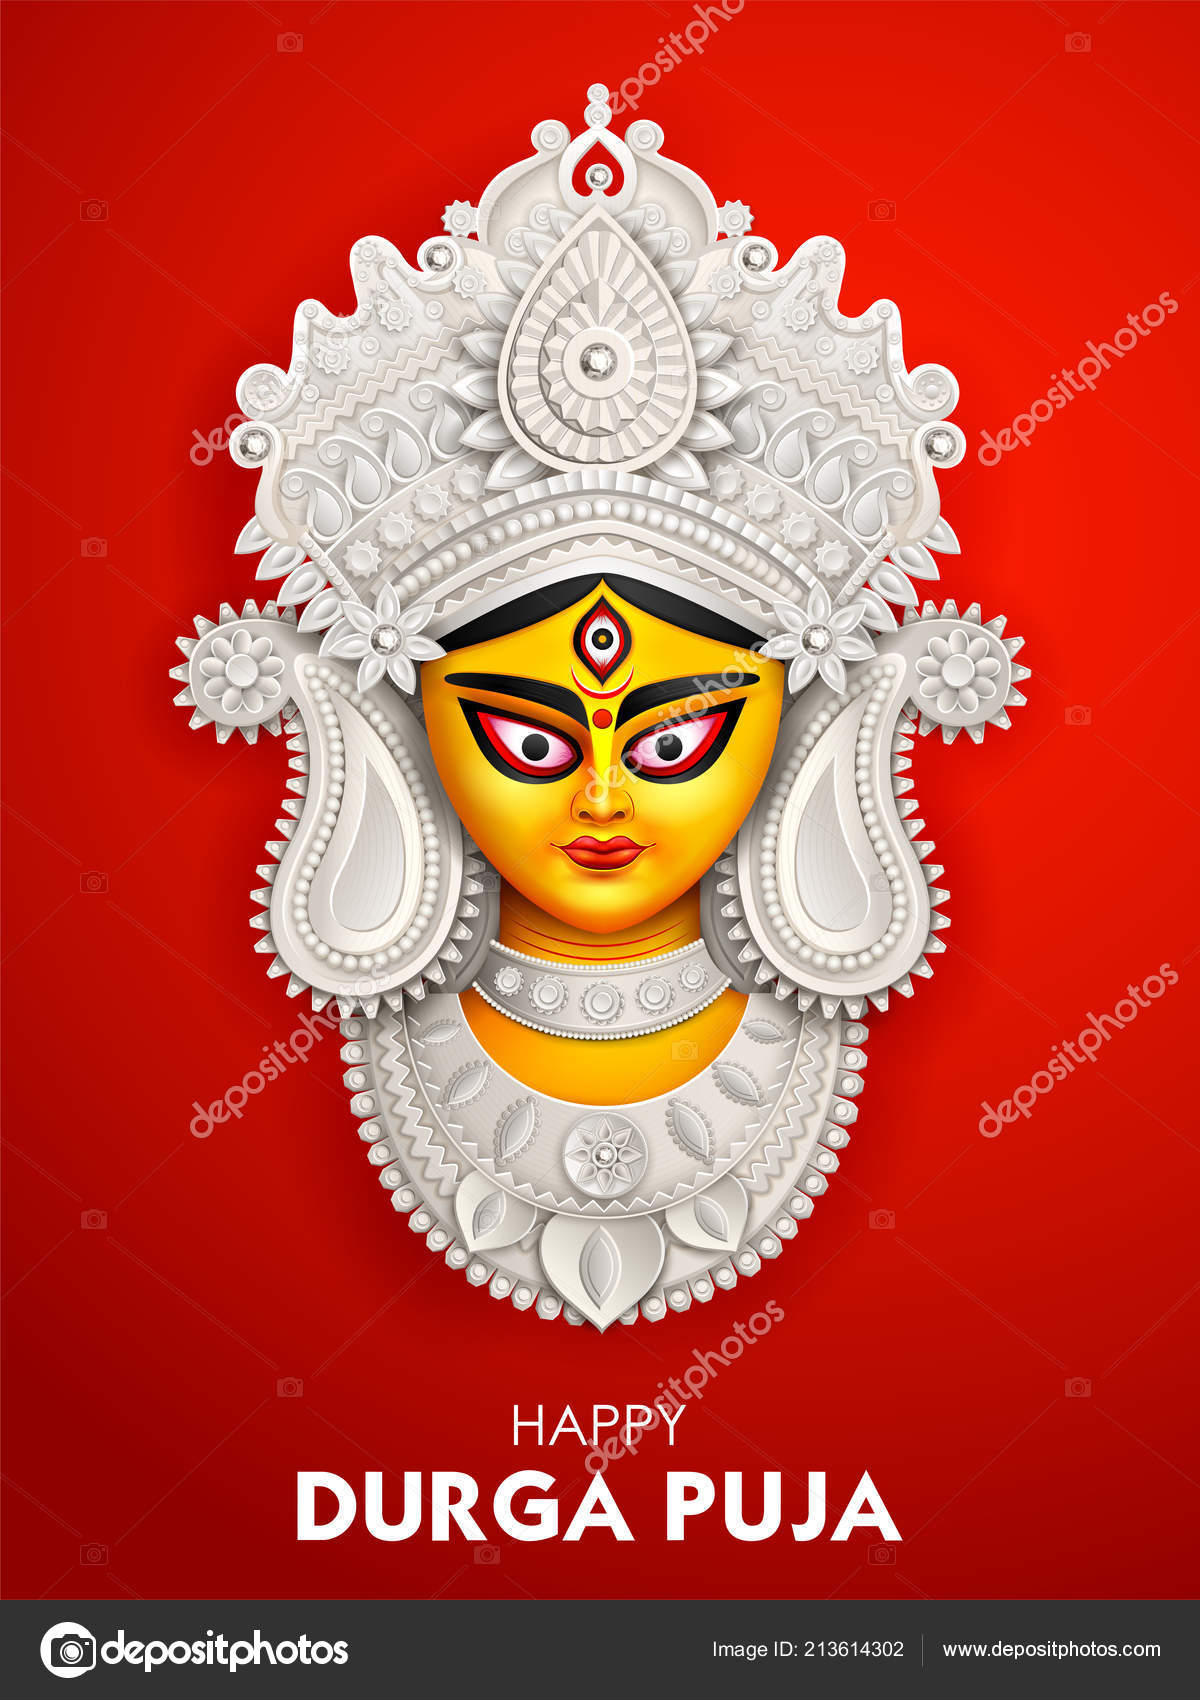 Top 999+ Durga Mata Hd Wallpaper Full HD, 4K✓Free to Use